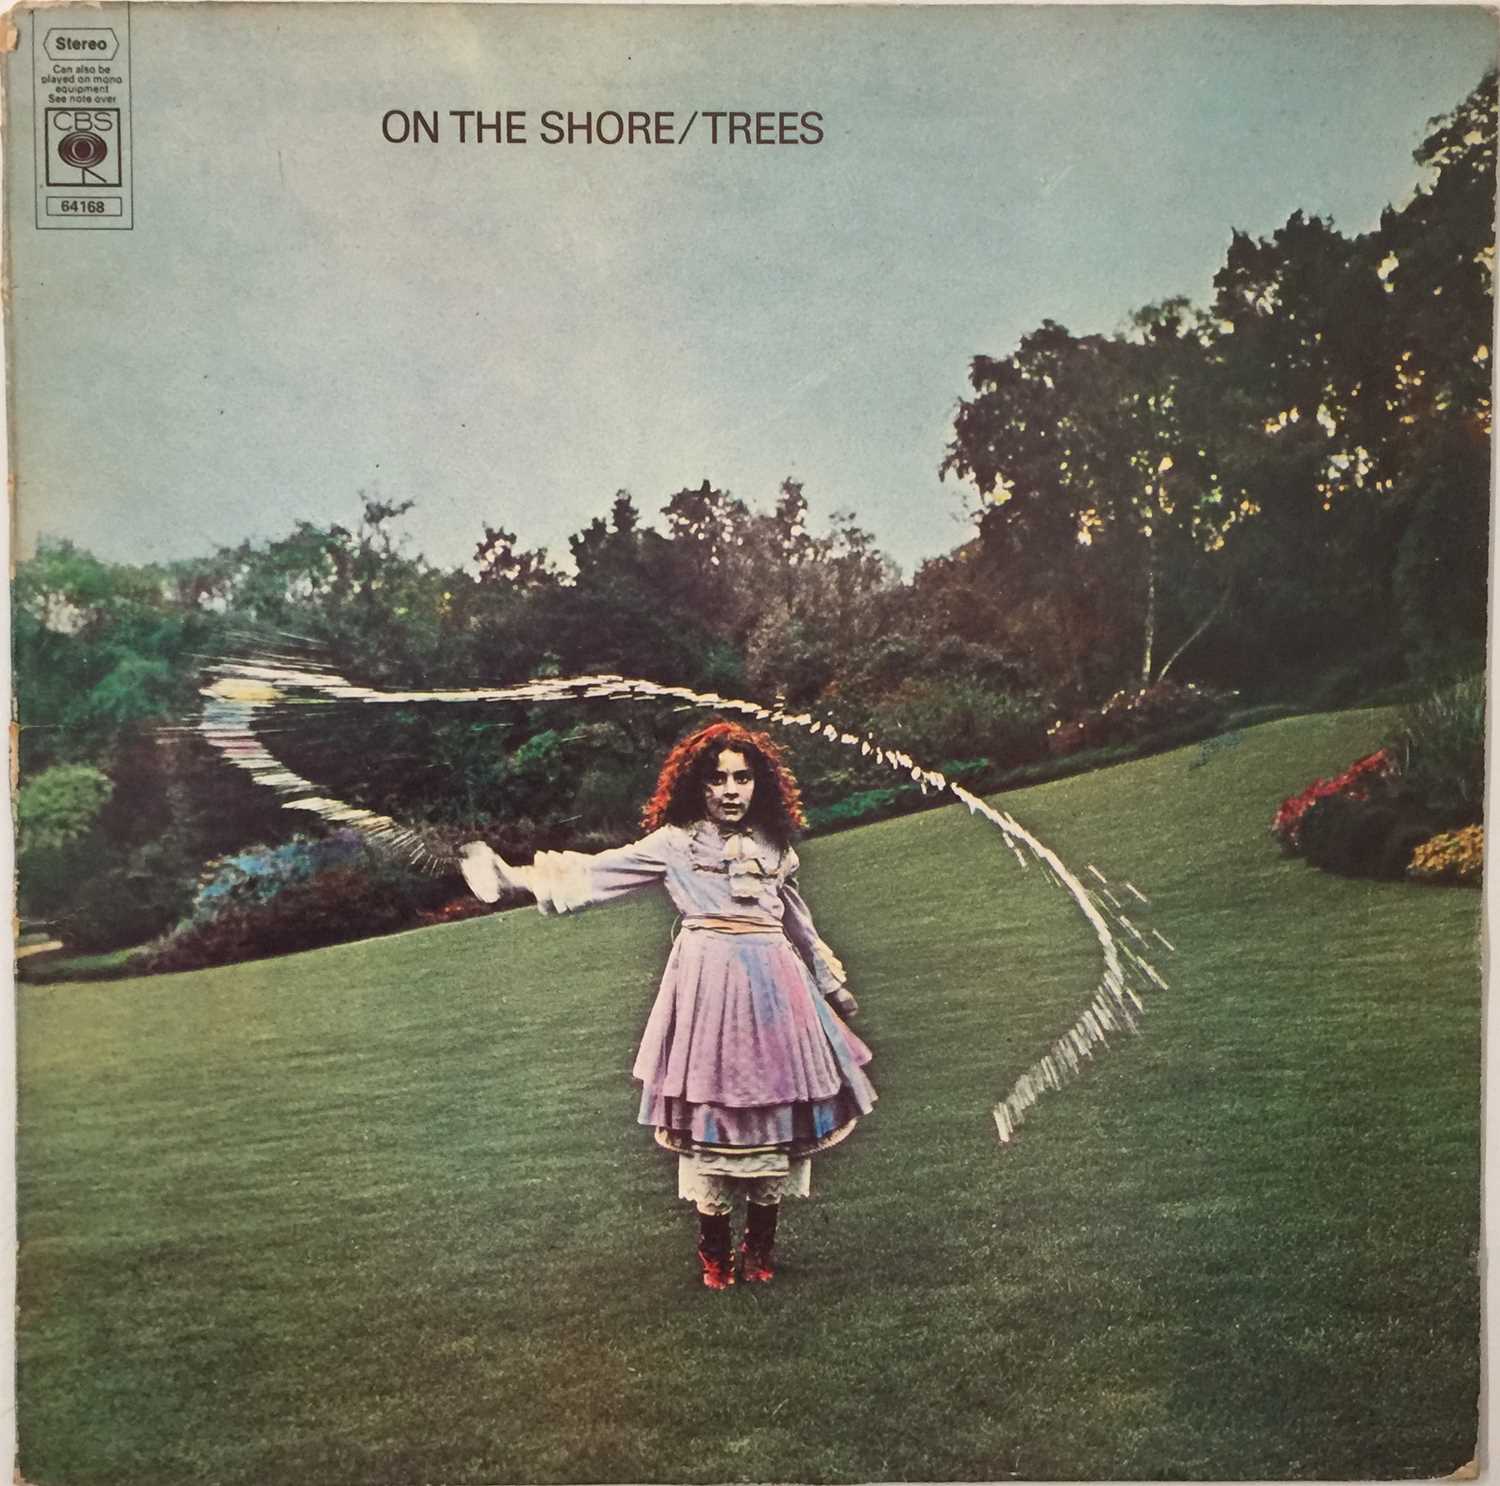 TREES - ON THE SHORE LP (CBS 64168 - UK ORIGINAL PRESSING) - Image 2 of 6